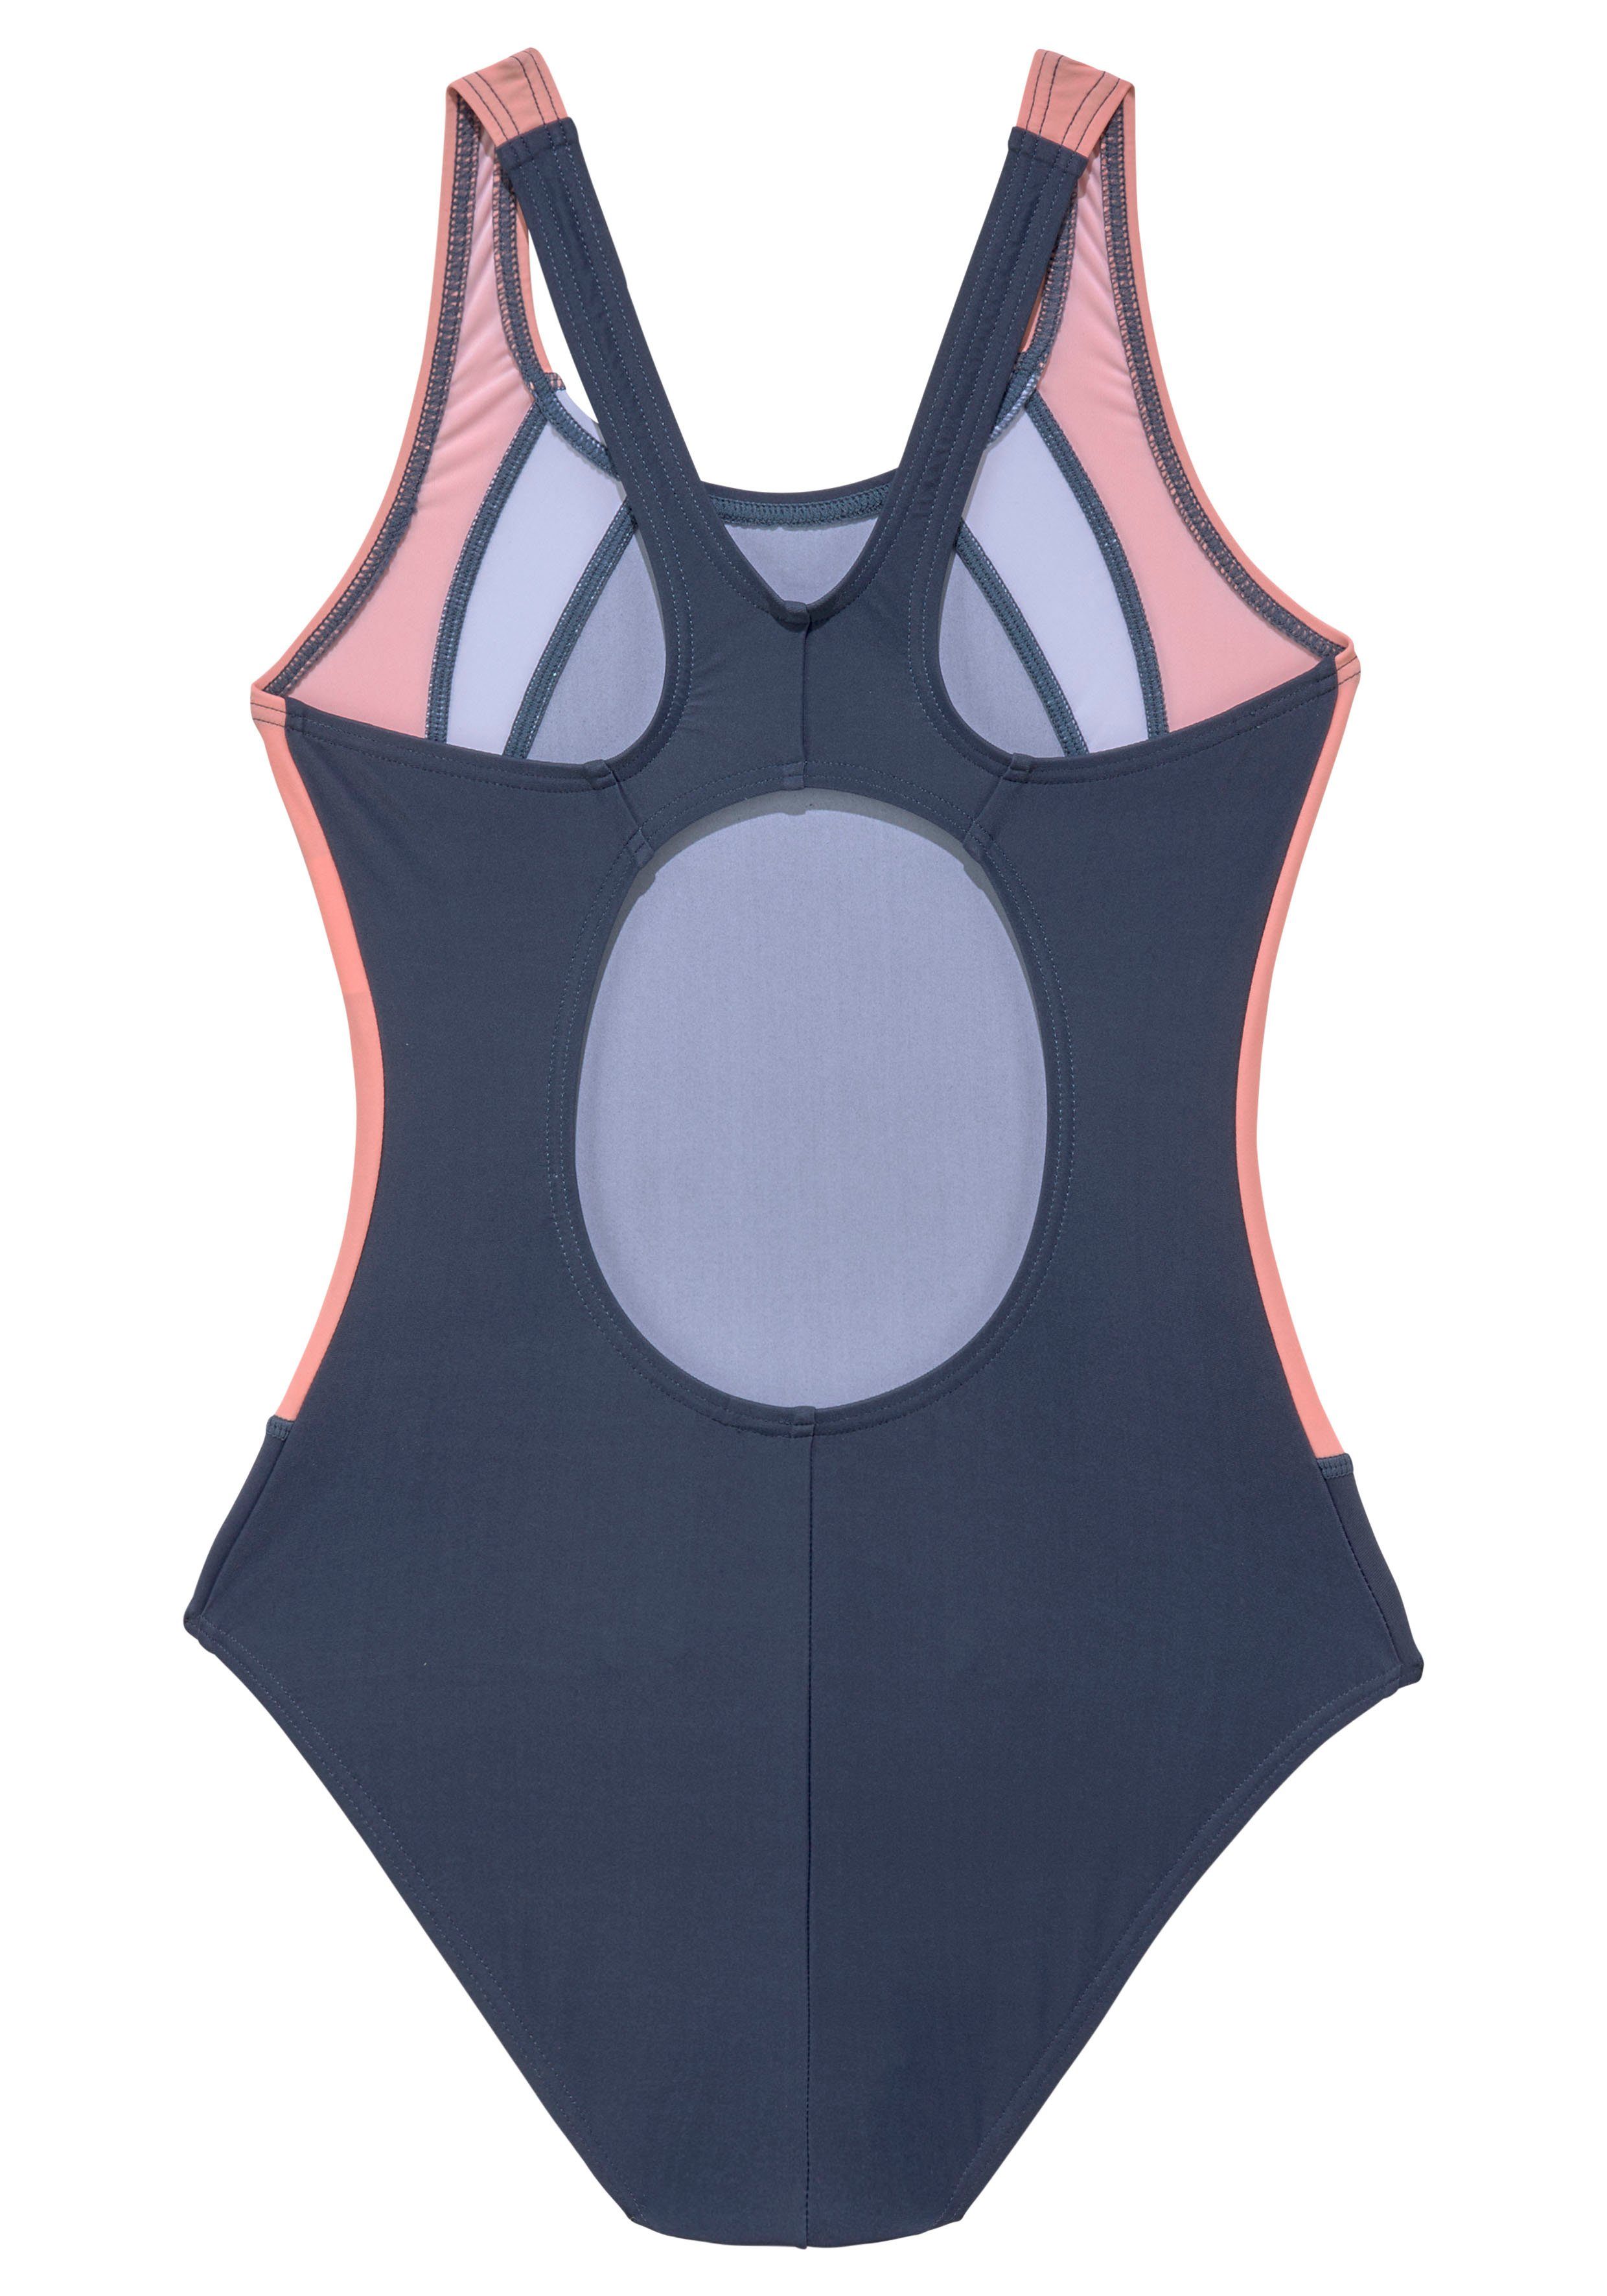 KangaROOS Badeanzug im rauchblau-hummer Farbmix sportlichen